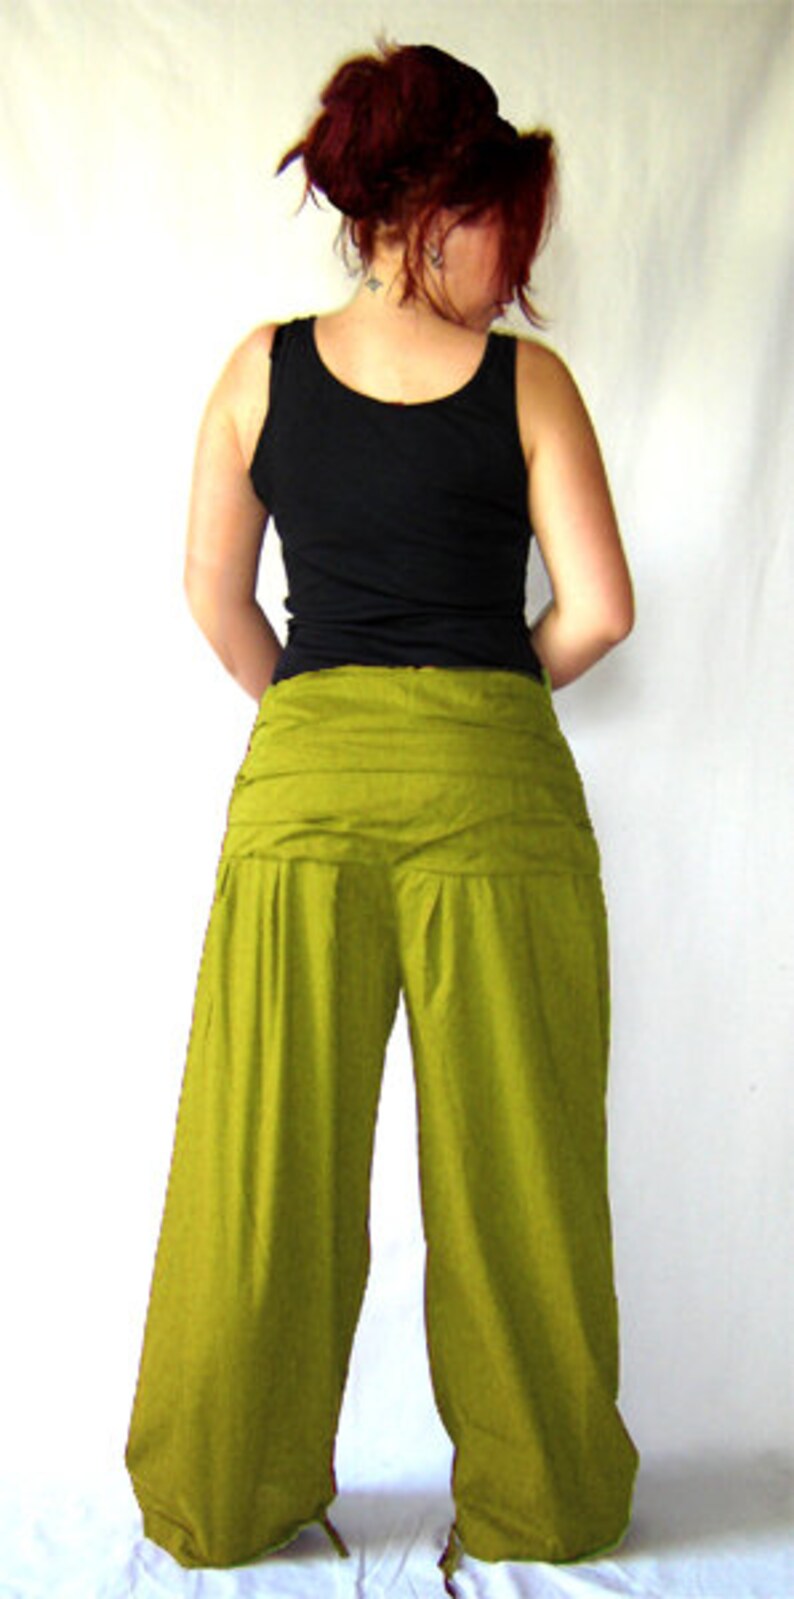 Pleated pants EXTRA LONG wide waistband olive green kissagato pants pump pants S M L XL image 4